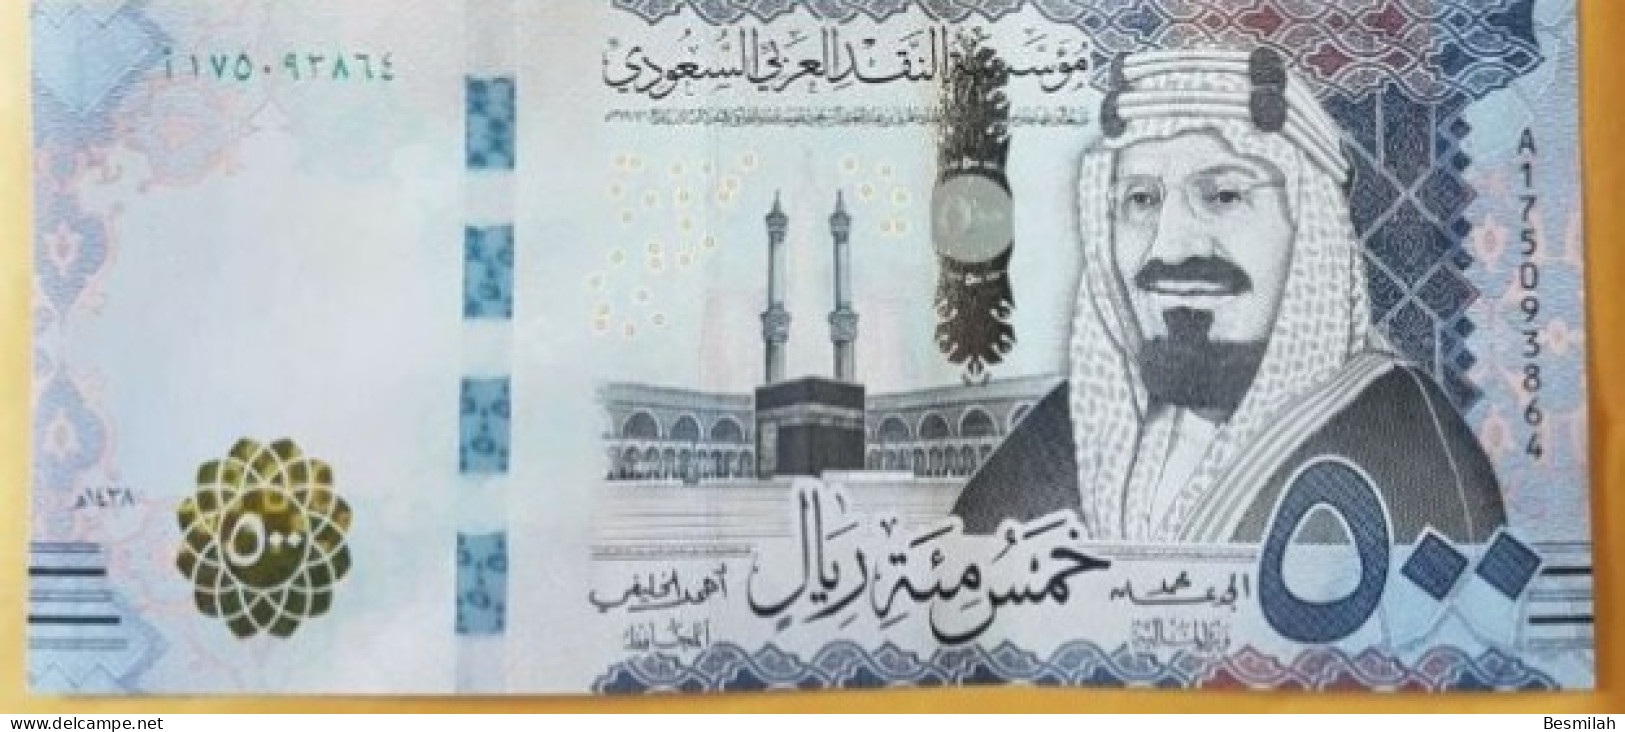 Saudi Arabia 500 Riyals 2017 P-42 B One Note UNC From A Bundle From SCB Not ATM - Saudi Arabia